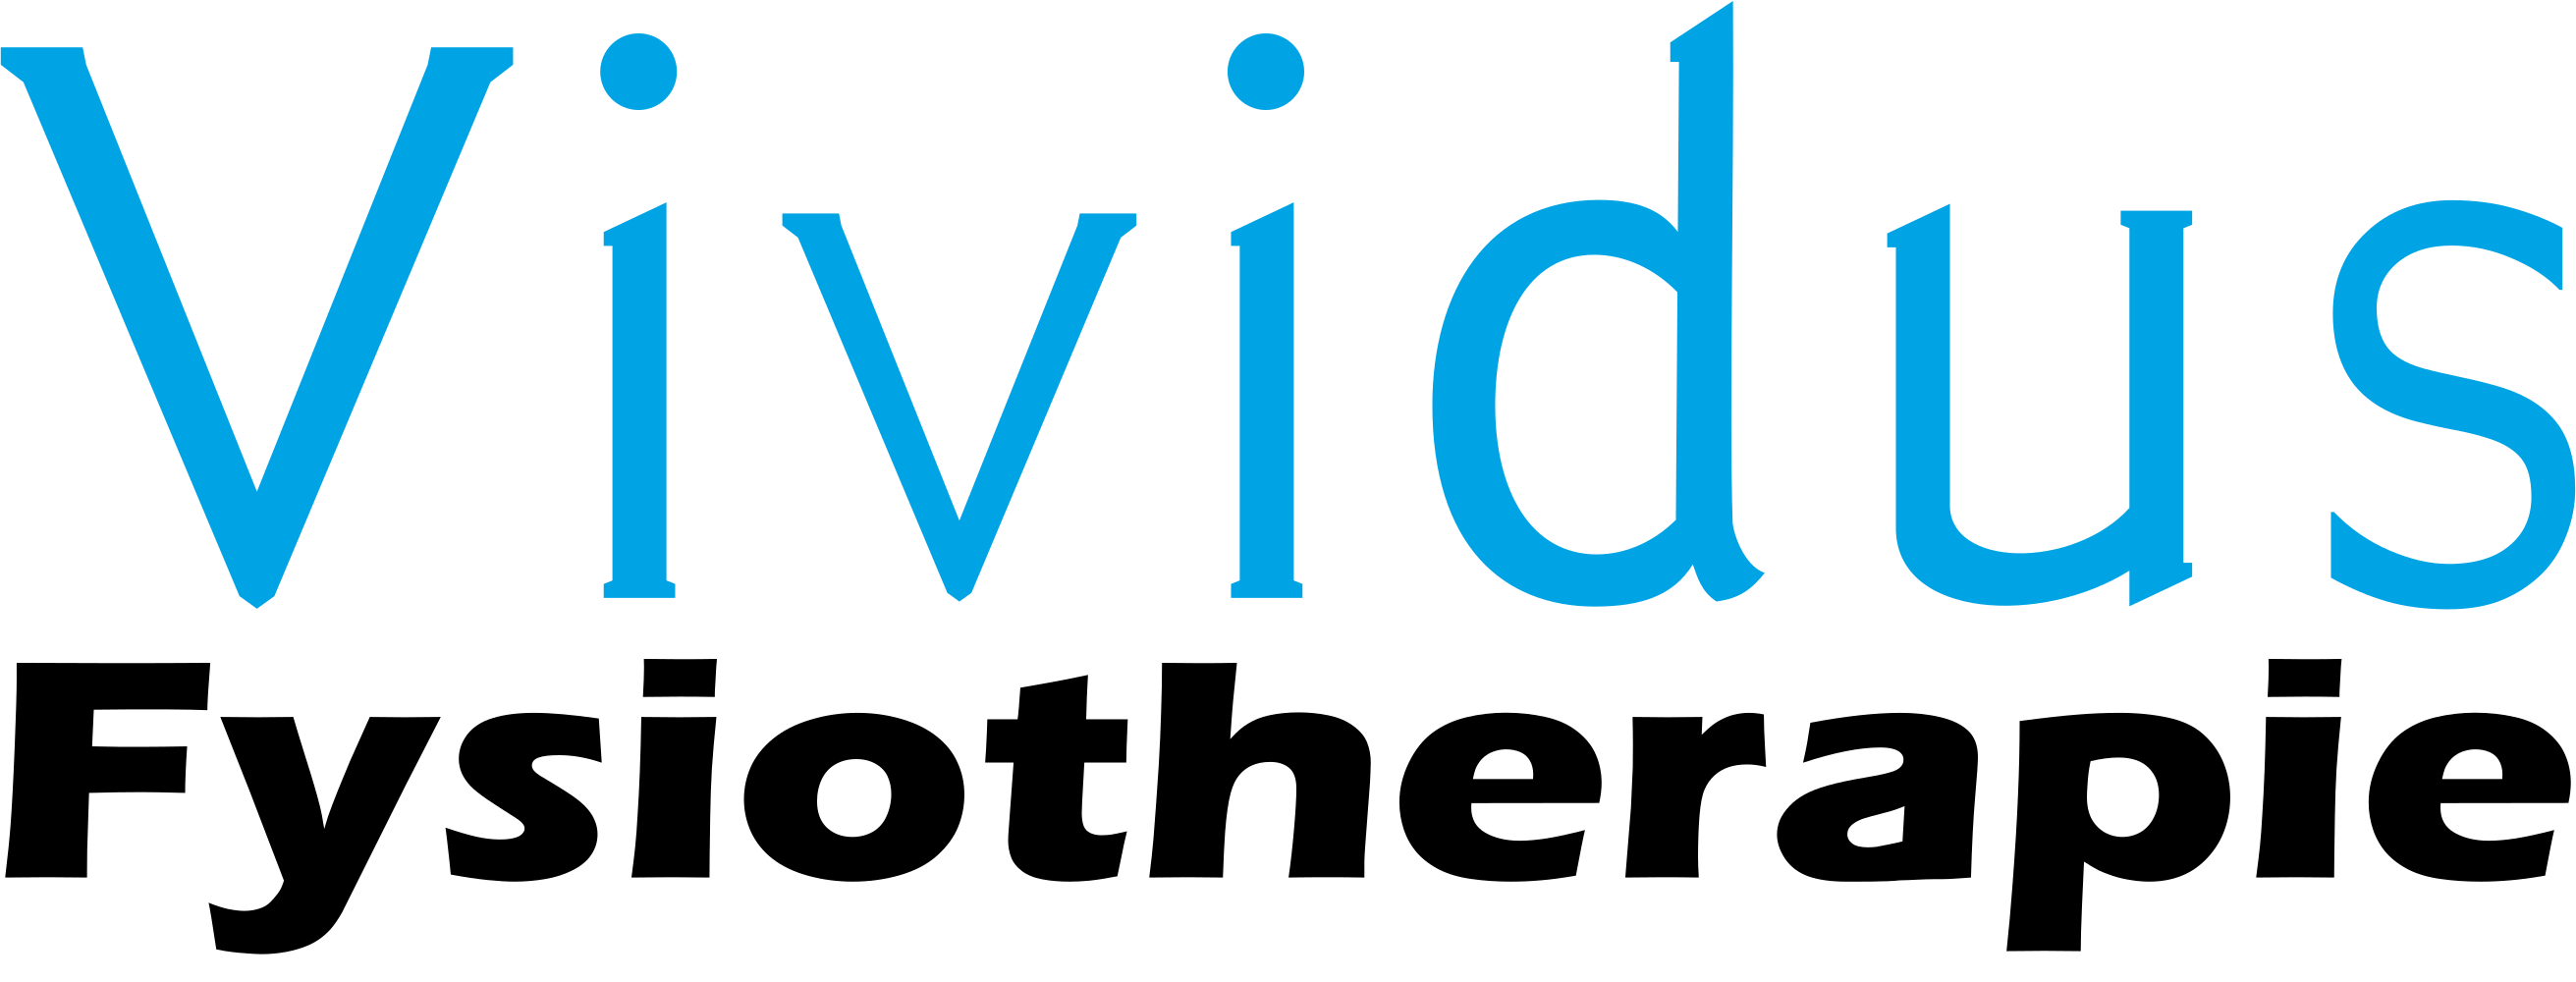 Fysiotherapie Vividus Venlo logo